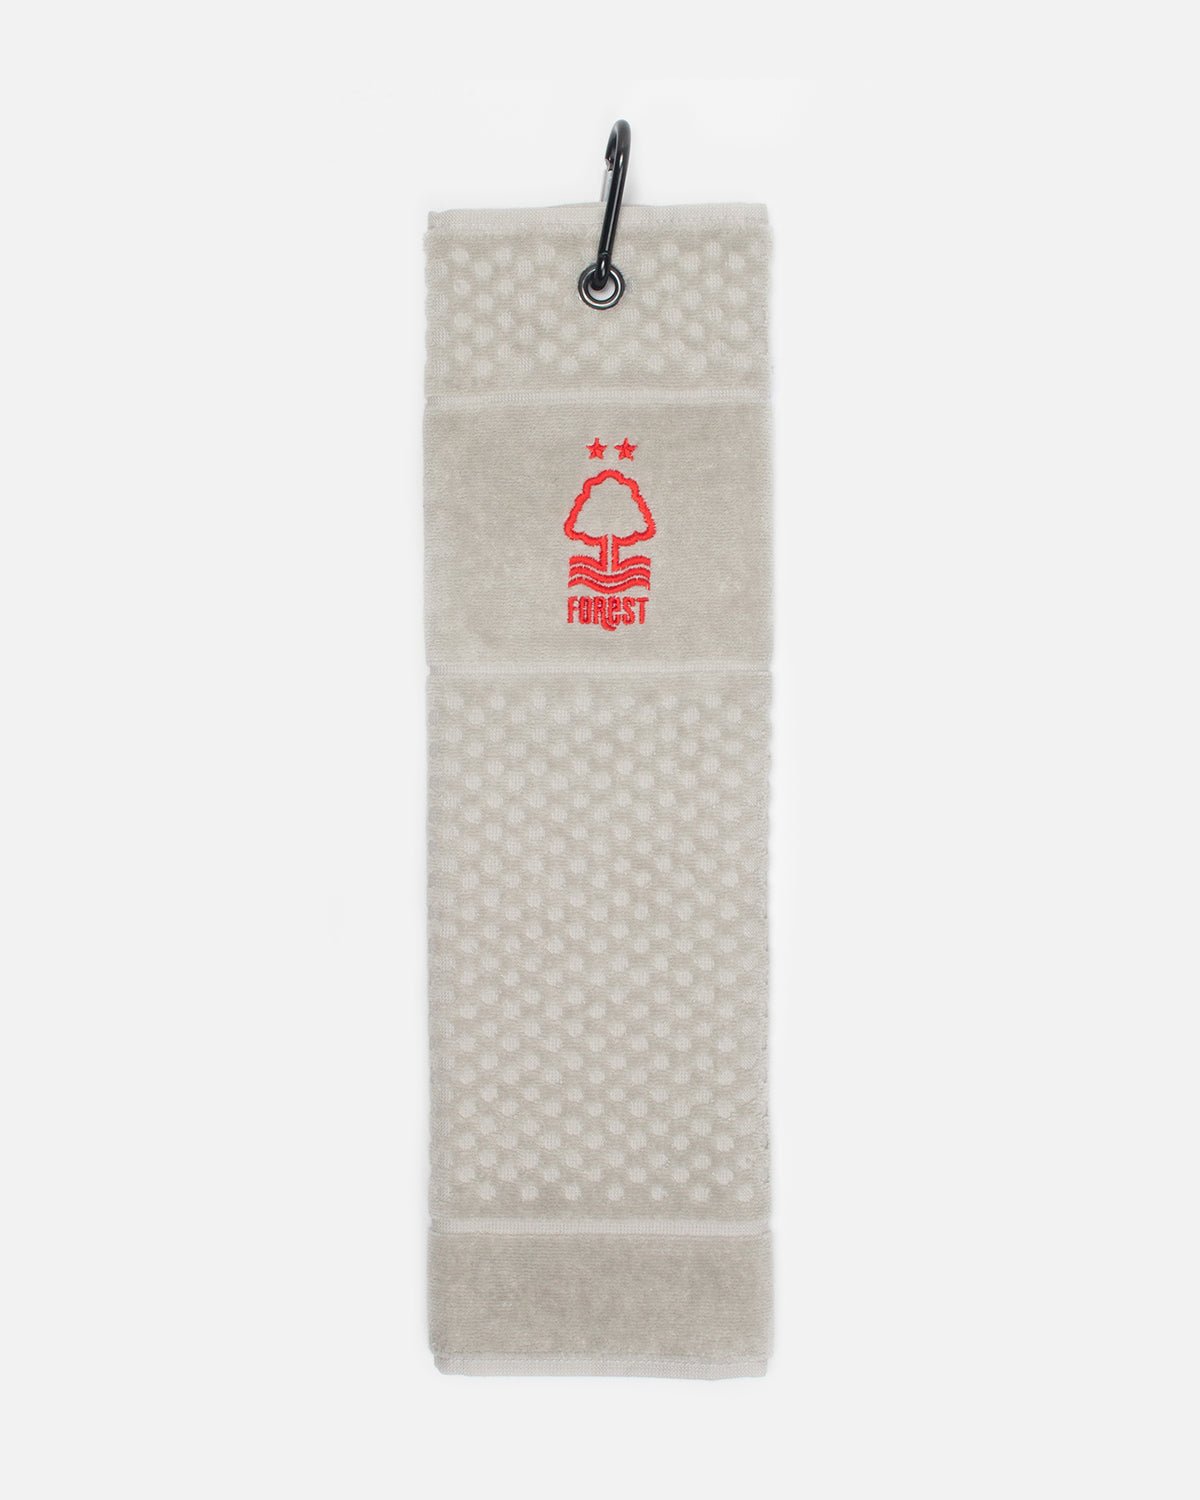 NFFC Grey Textured Jacquard Tri-fold Golf Towel - Nottingham Forest FC